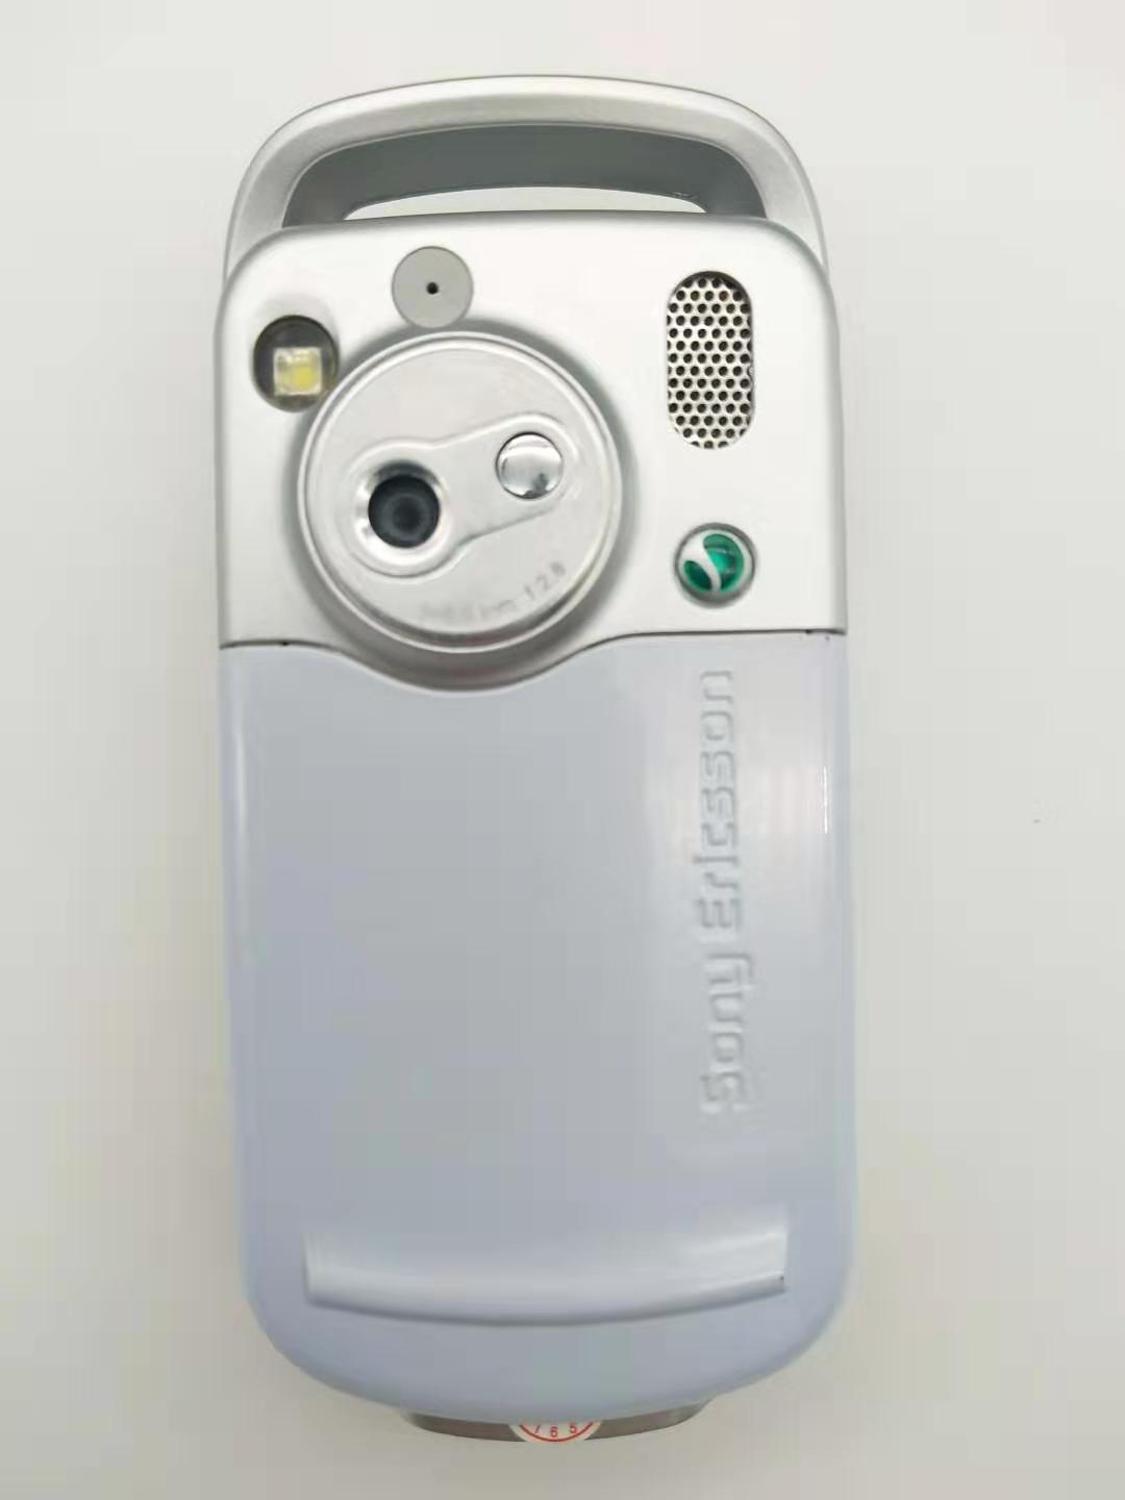 Sony Ericsson W550i Slide phone - astore.in